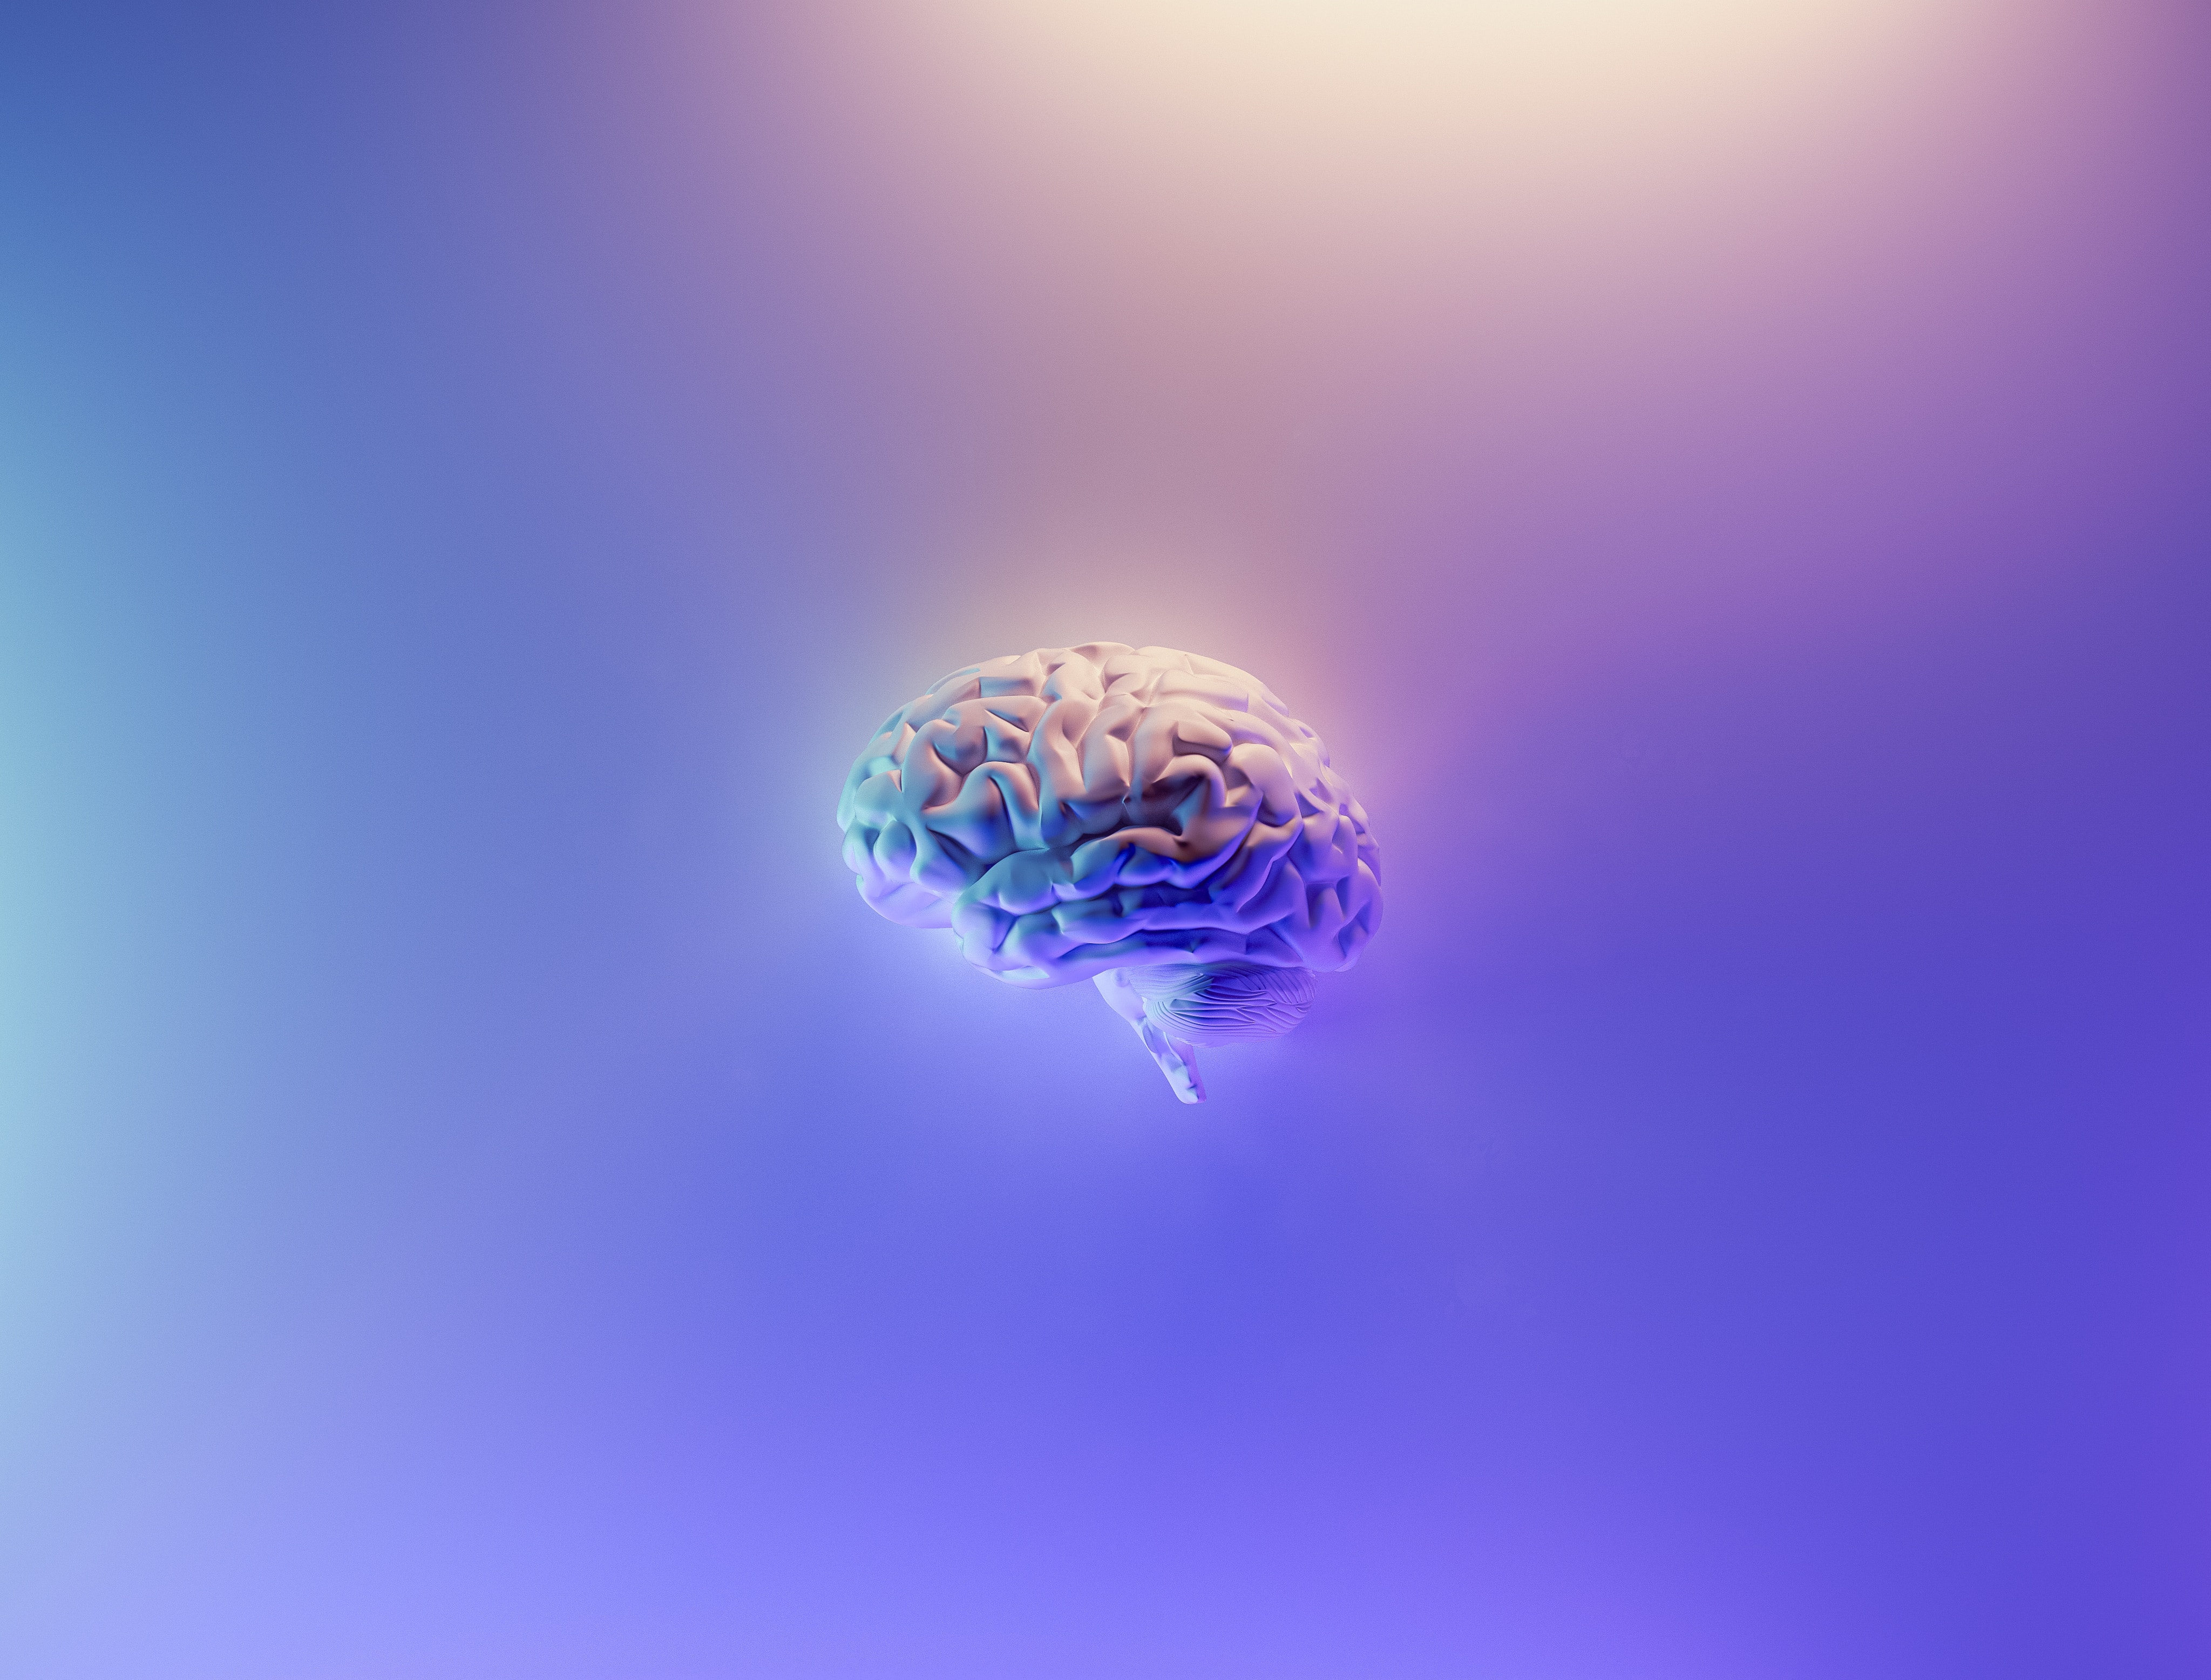 Aνθρώπινος εγκέφαλος: Επιστήμονες εντόπισαν μυστηριώδη σπειροειδή σήματα